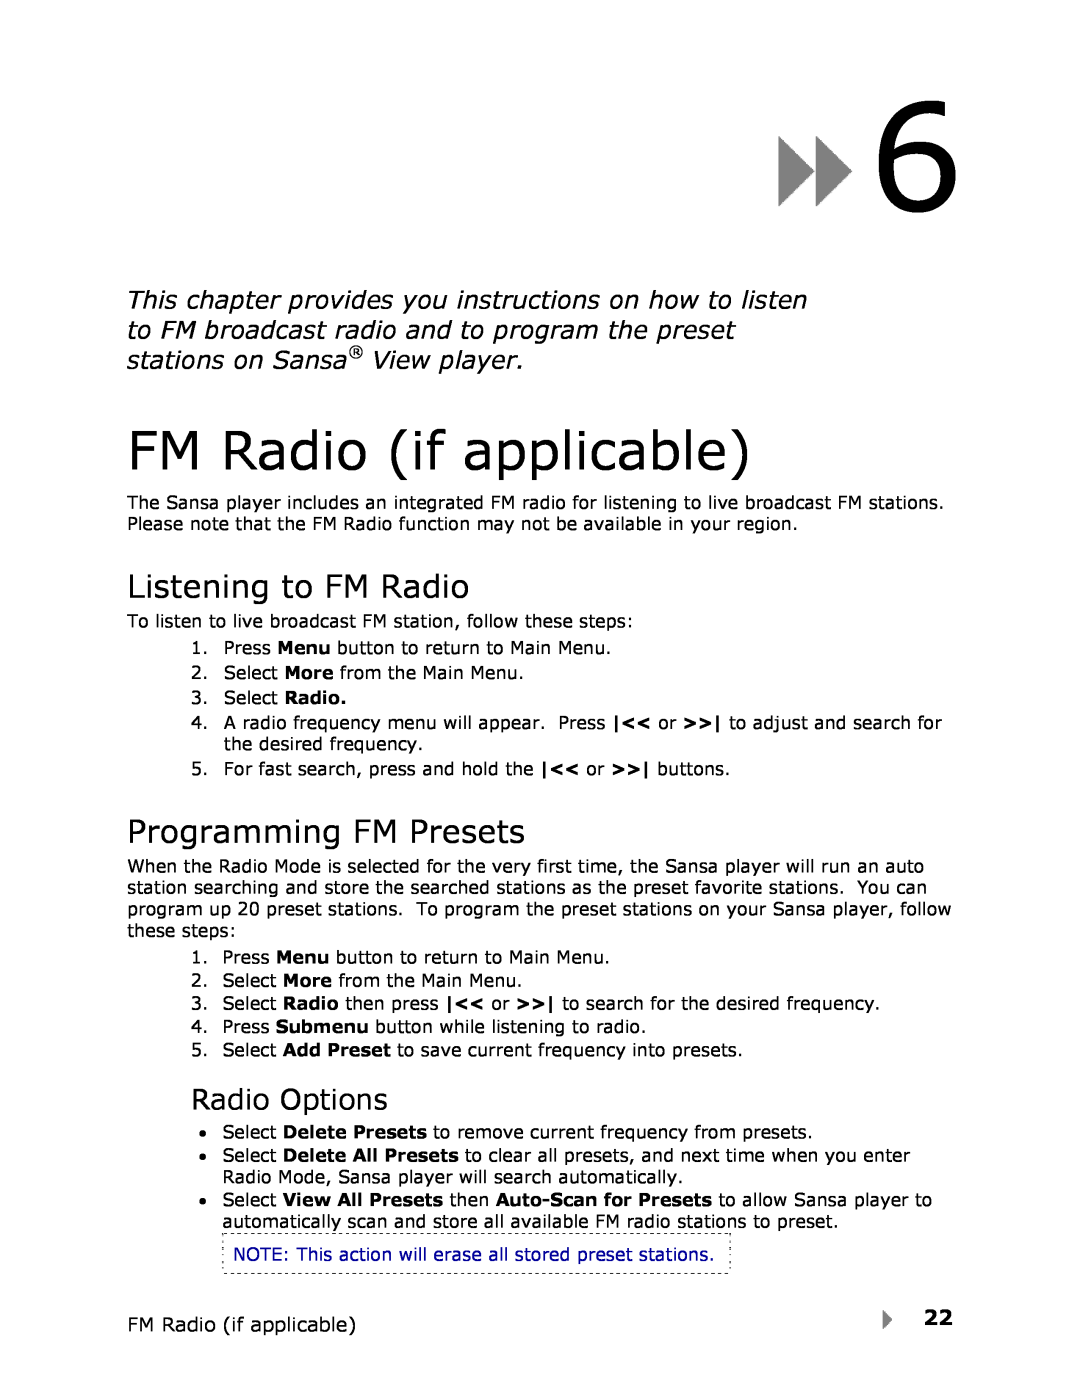 SanDisk View user manual FM Radio if applicable, Listening to FM Radio, Programming FM Presets, Radio Options 